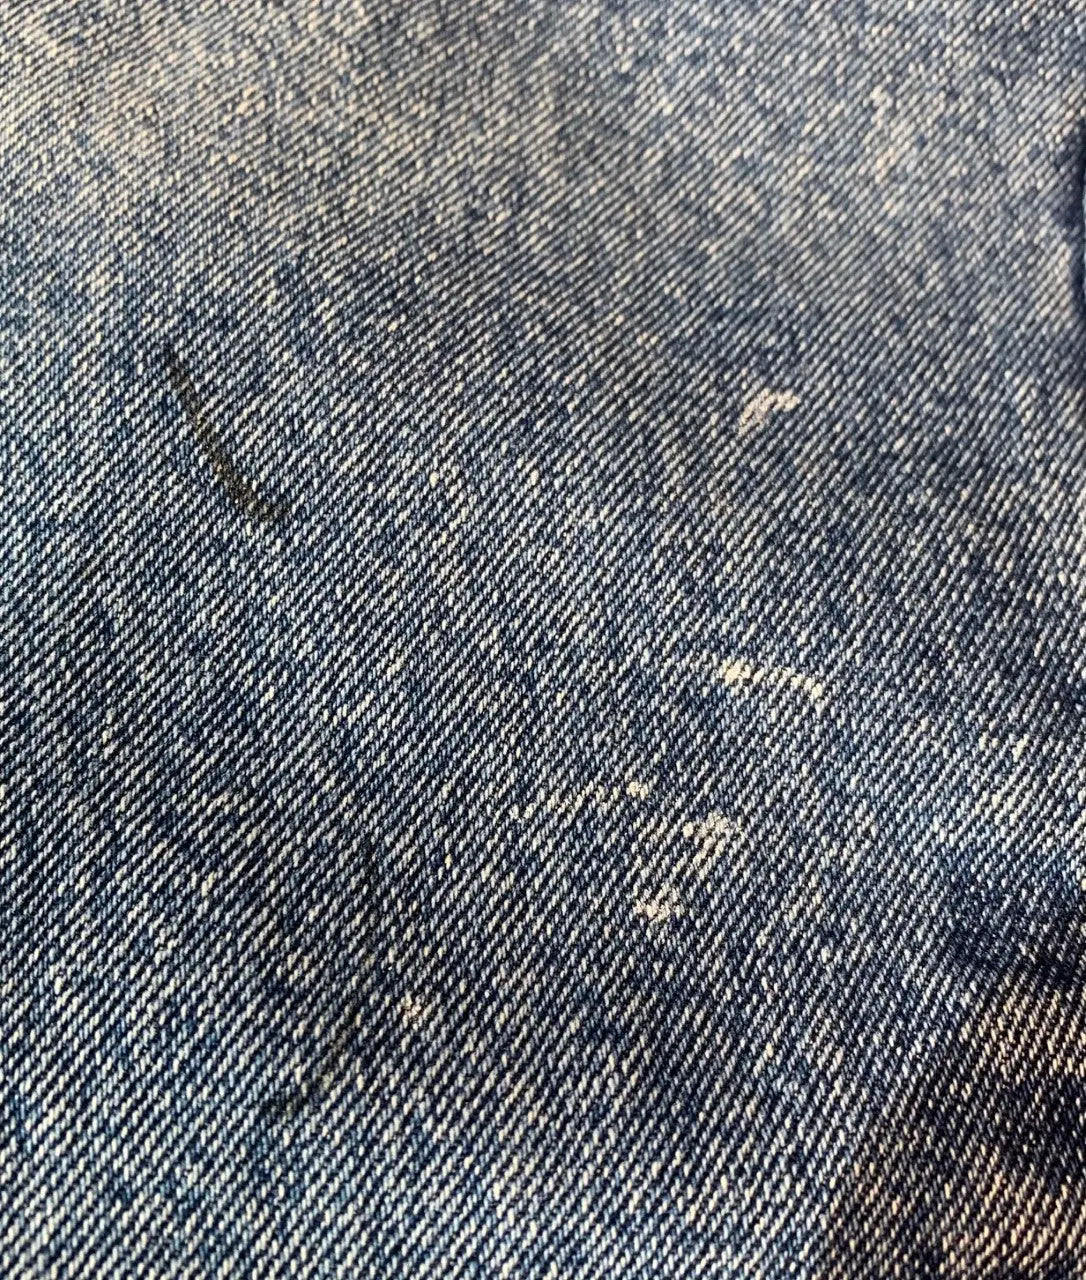 Bram's Paris - Regular Fit Jeans- ThriftTale.com - Vintage and second handclothing